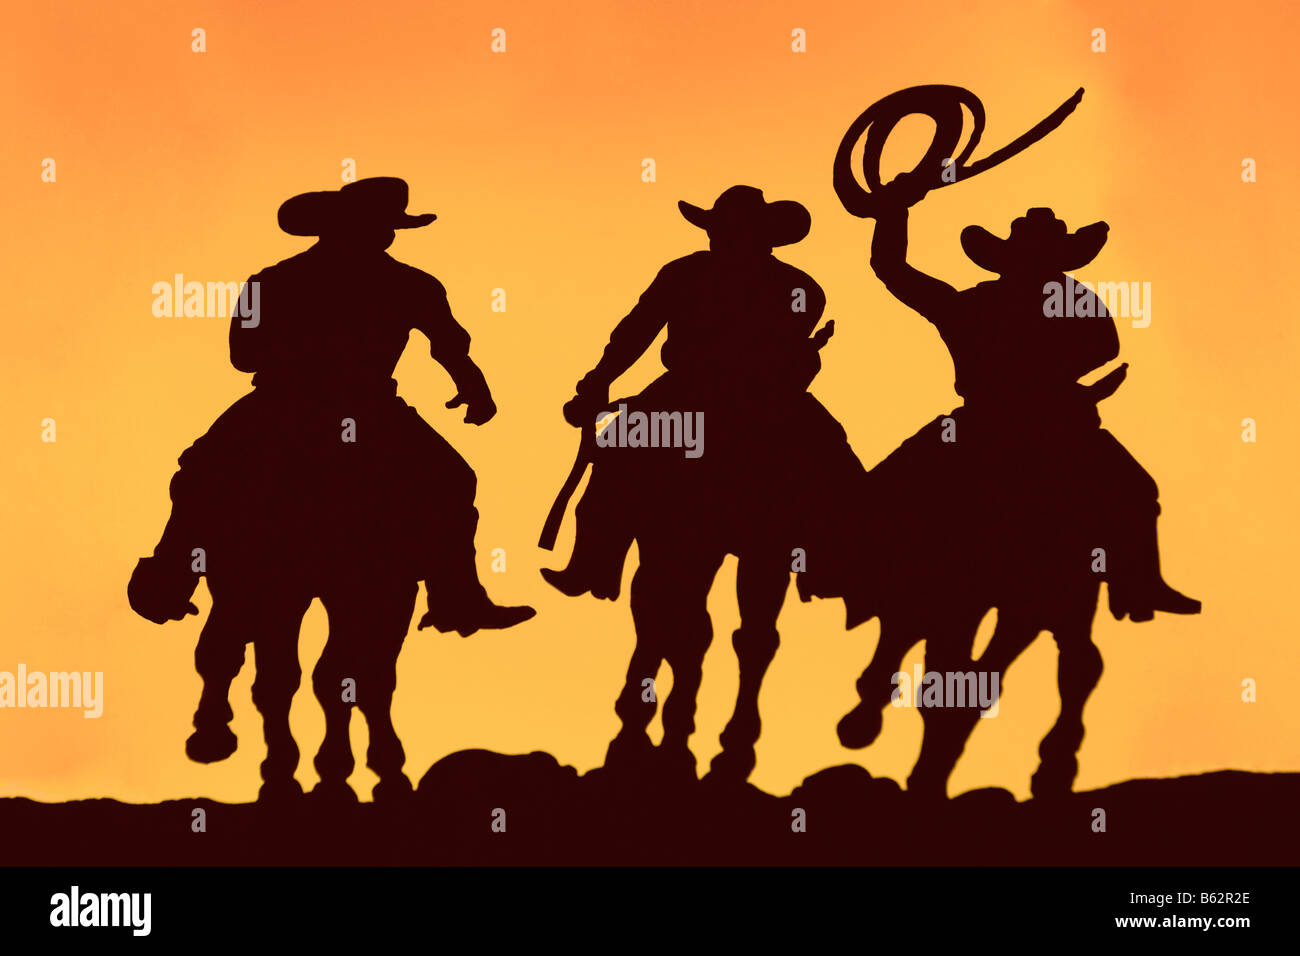 Silhouette of three men horseback riding Stock Photo